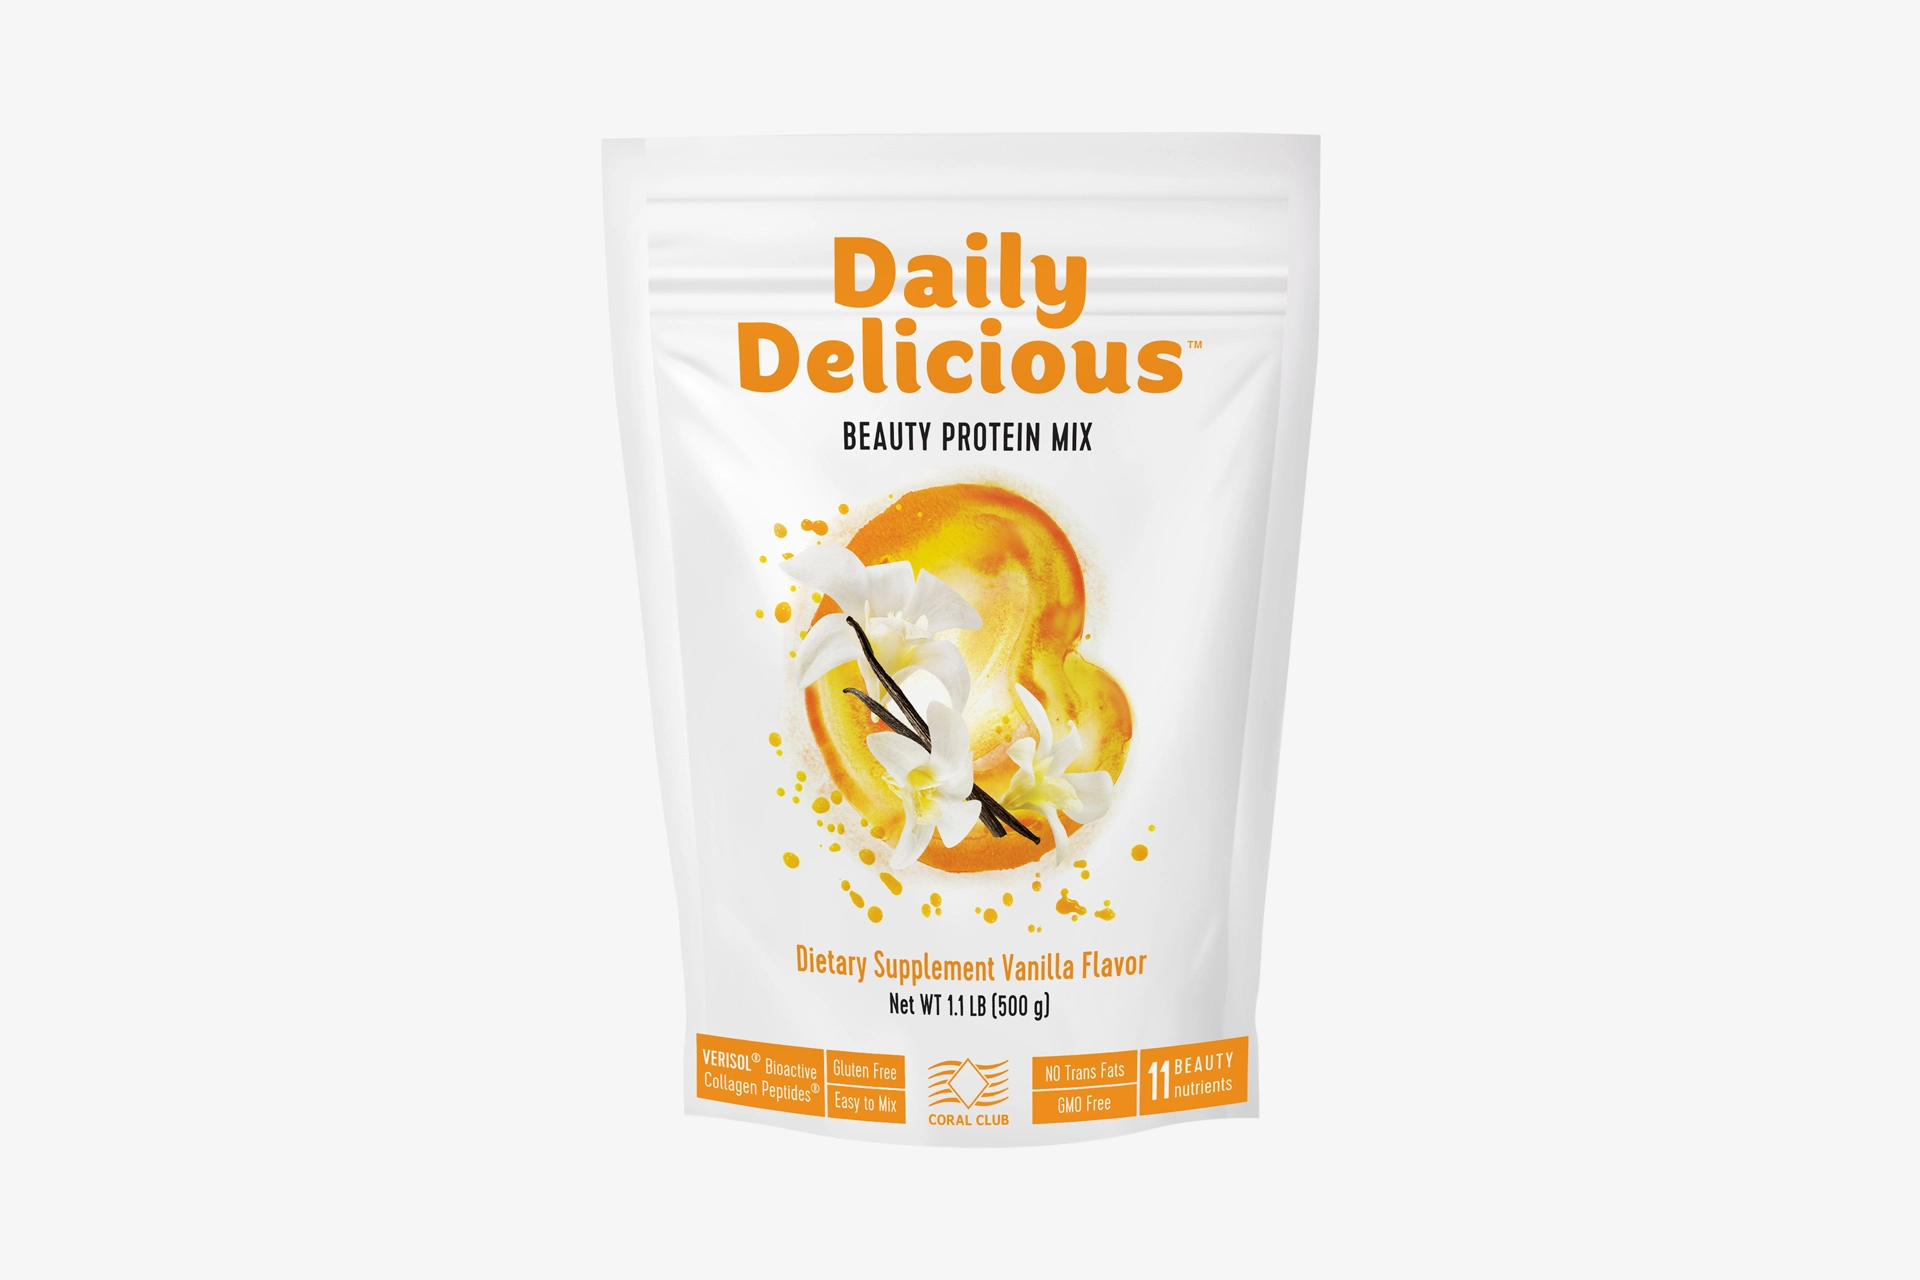 Daily Delicious Beauty Protein Mix Vanilla